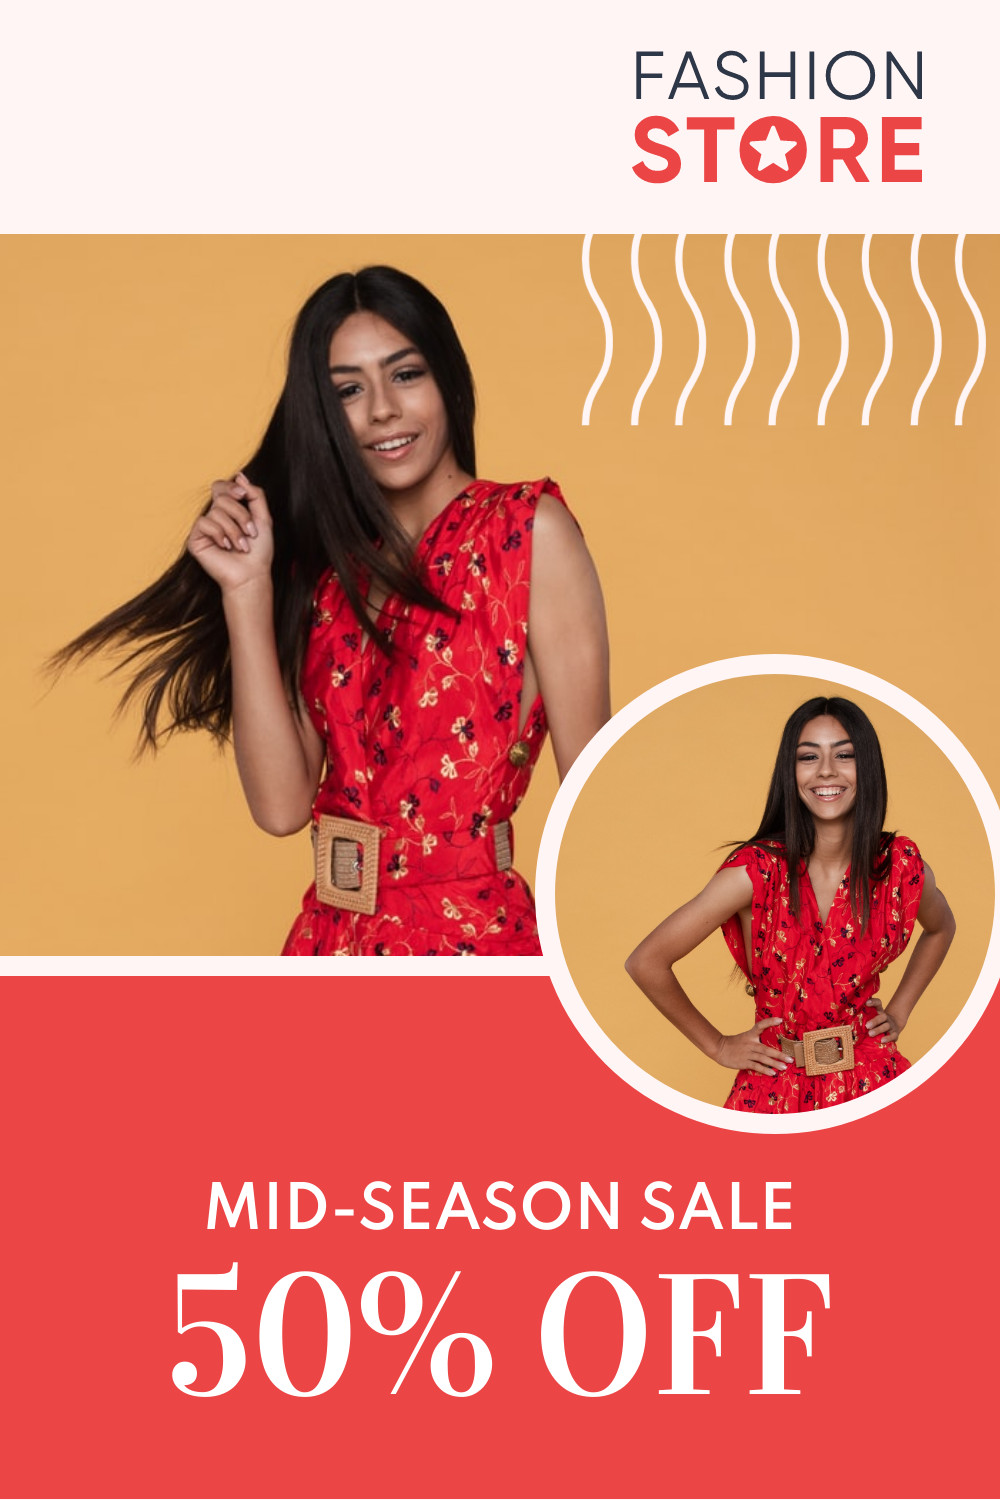 Fashion Store Mid-Season Sale Inline Rectangle 300x250